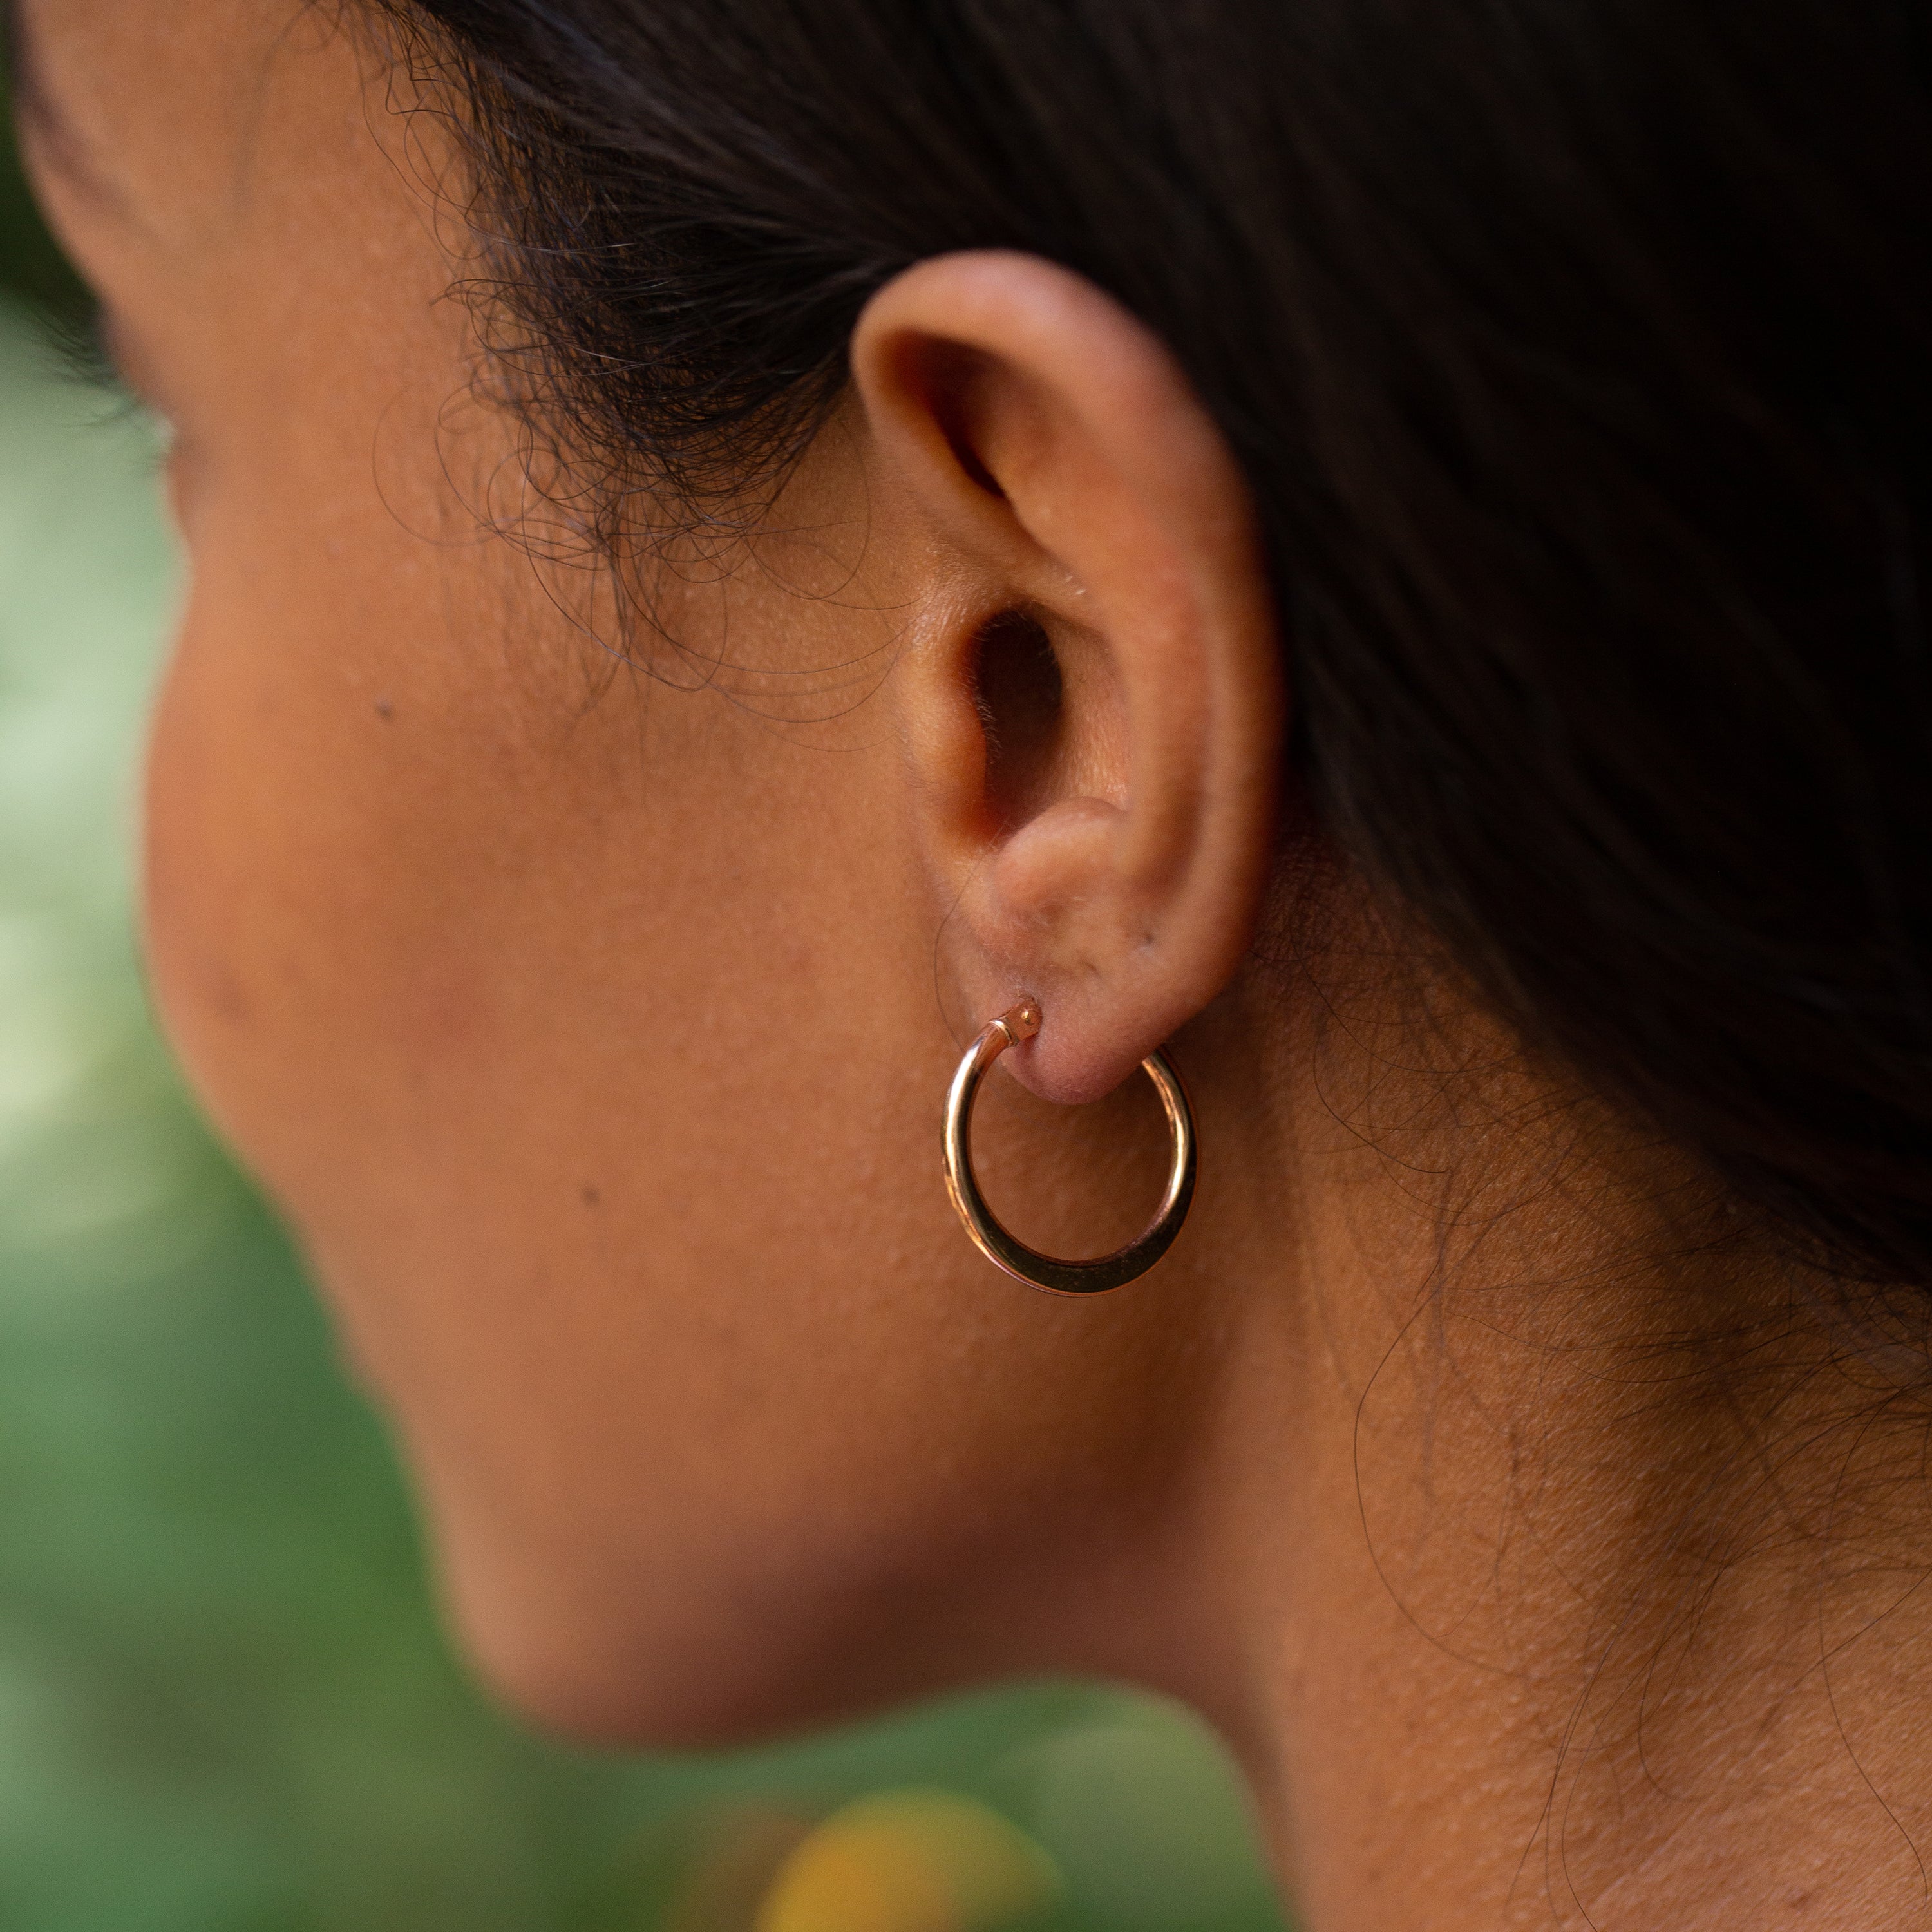 Italian 14k Rose Gold Hoop Earrings